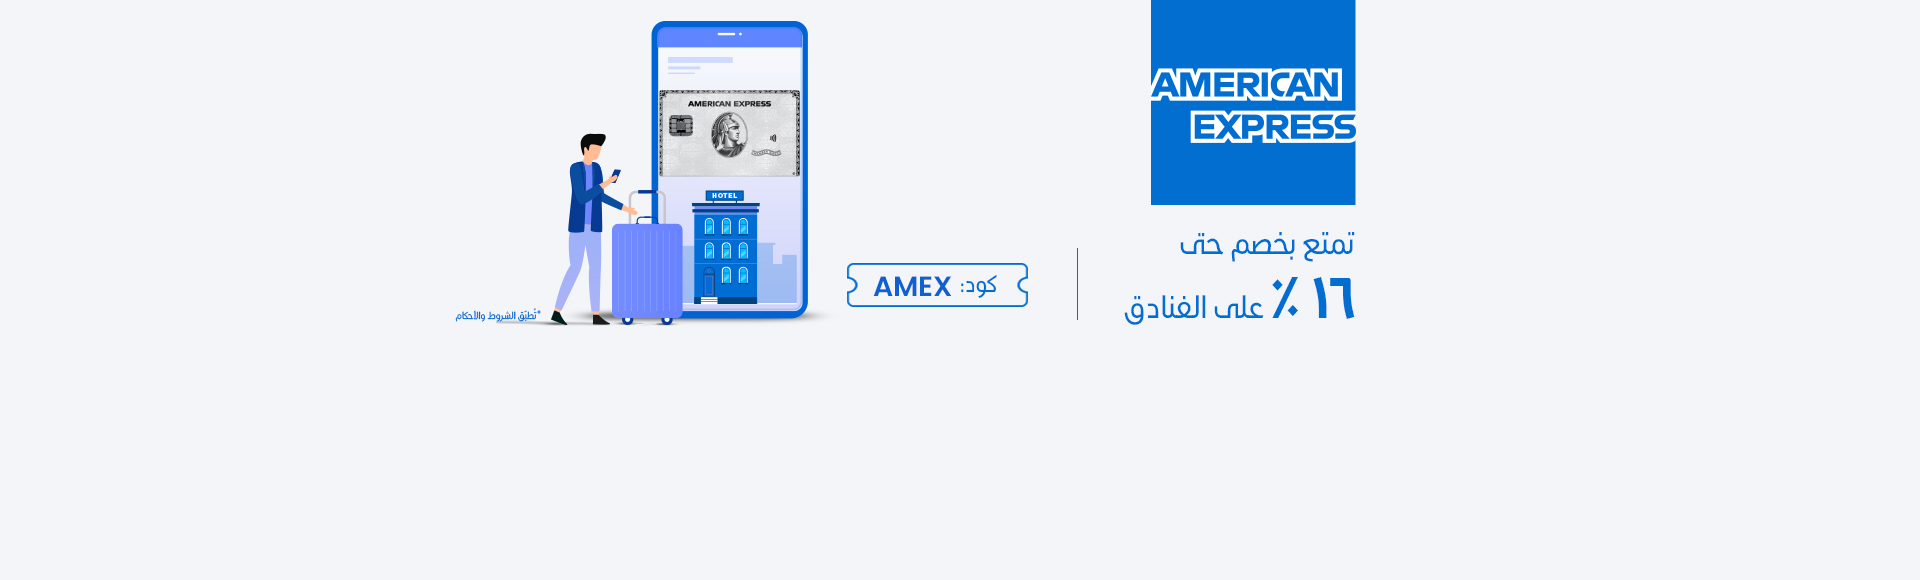 EMAX offer